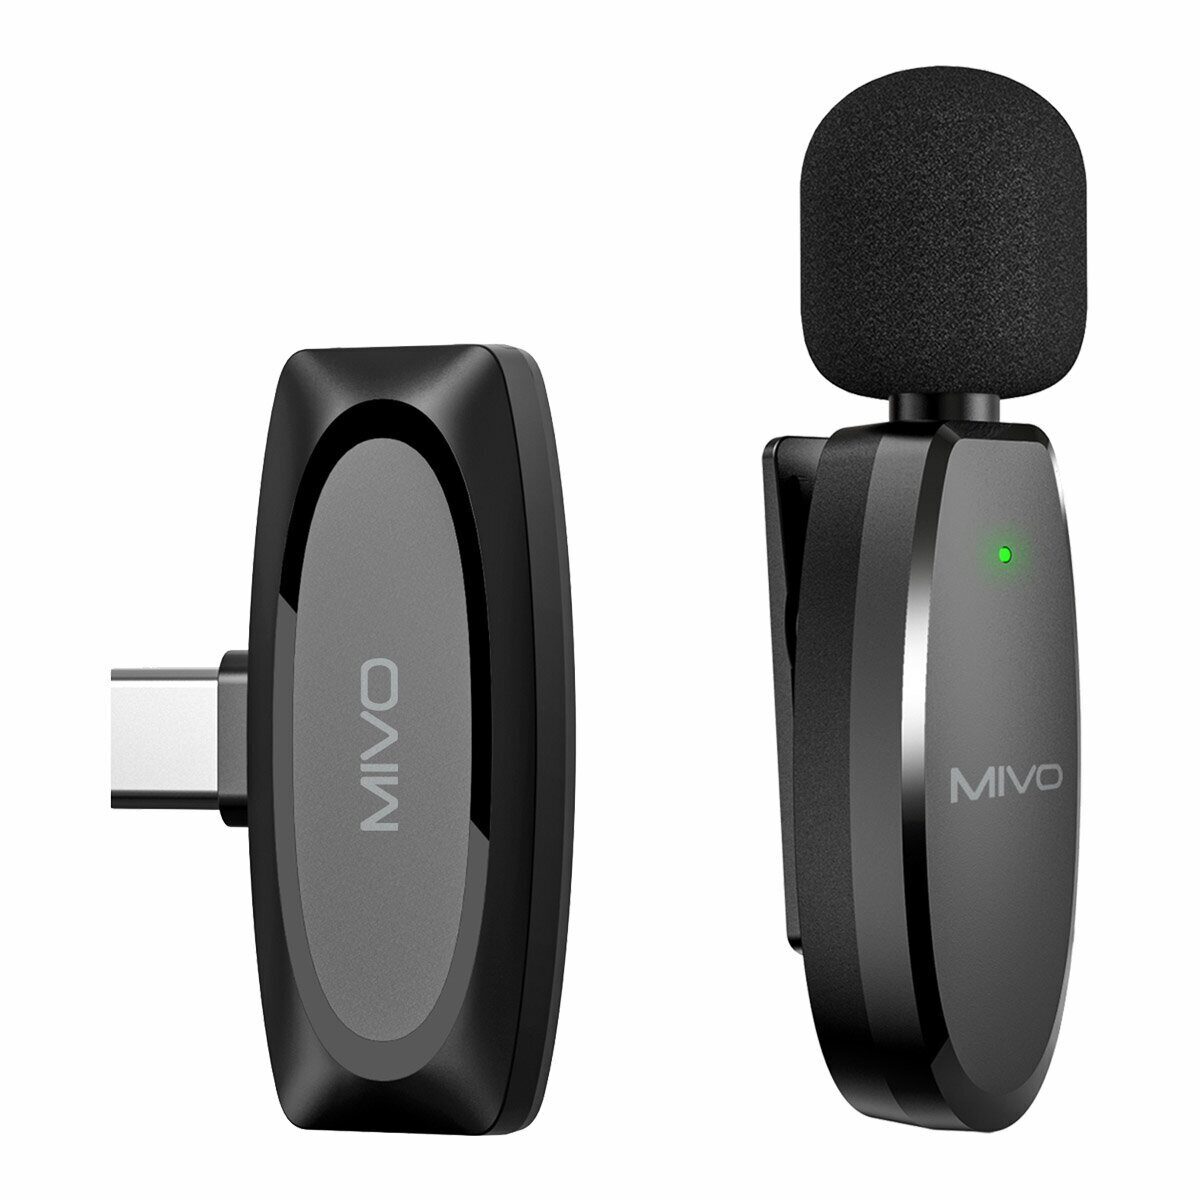  Bluetooth   Mivo MK-610T (Type-C)